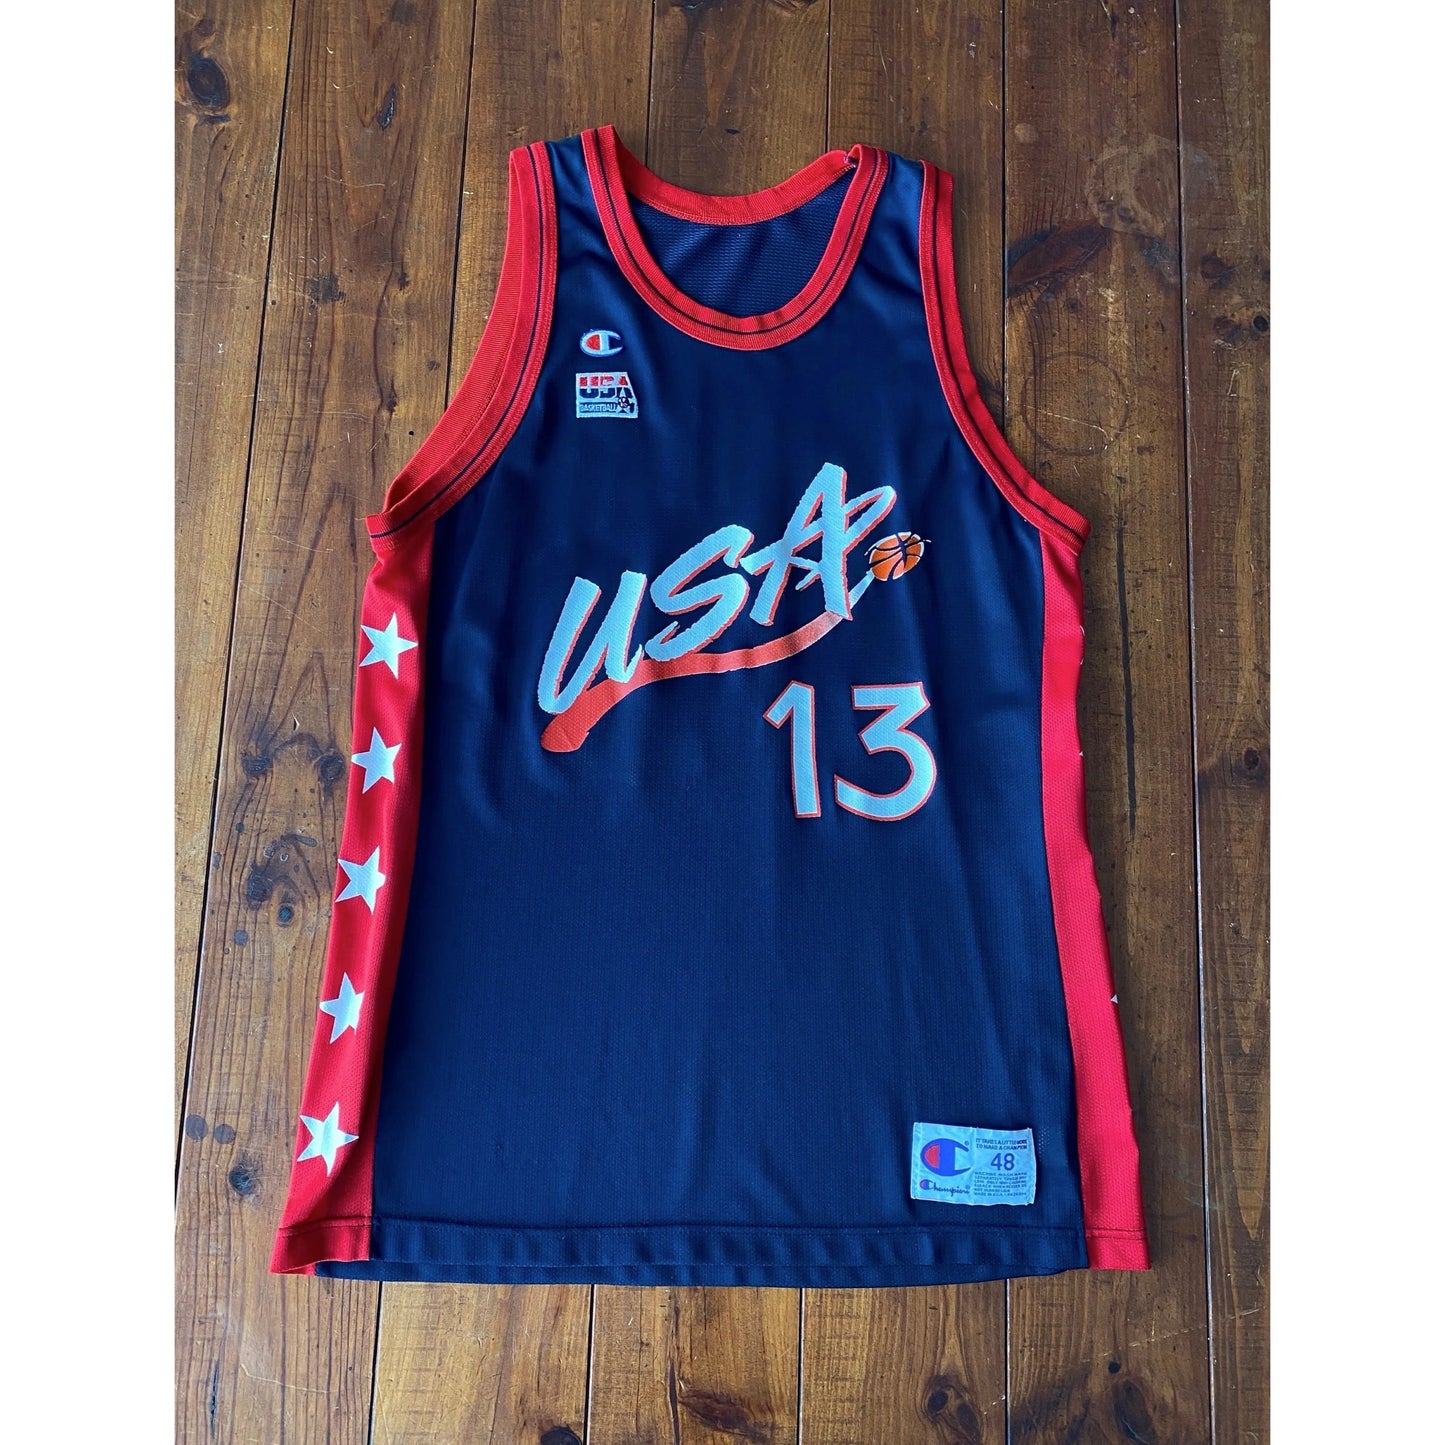 Vintage 90s NBA Champion USA Olympics Dream Team Shaq O'Neal #13 Jersey - Size 48